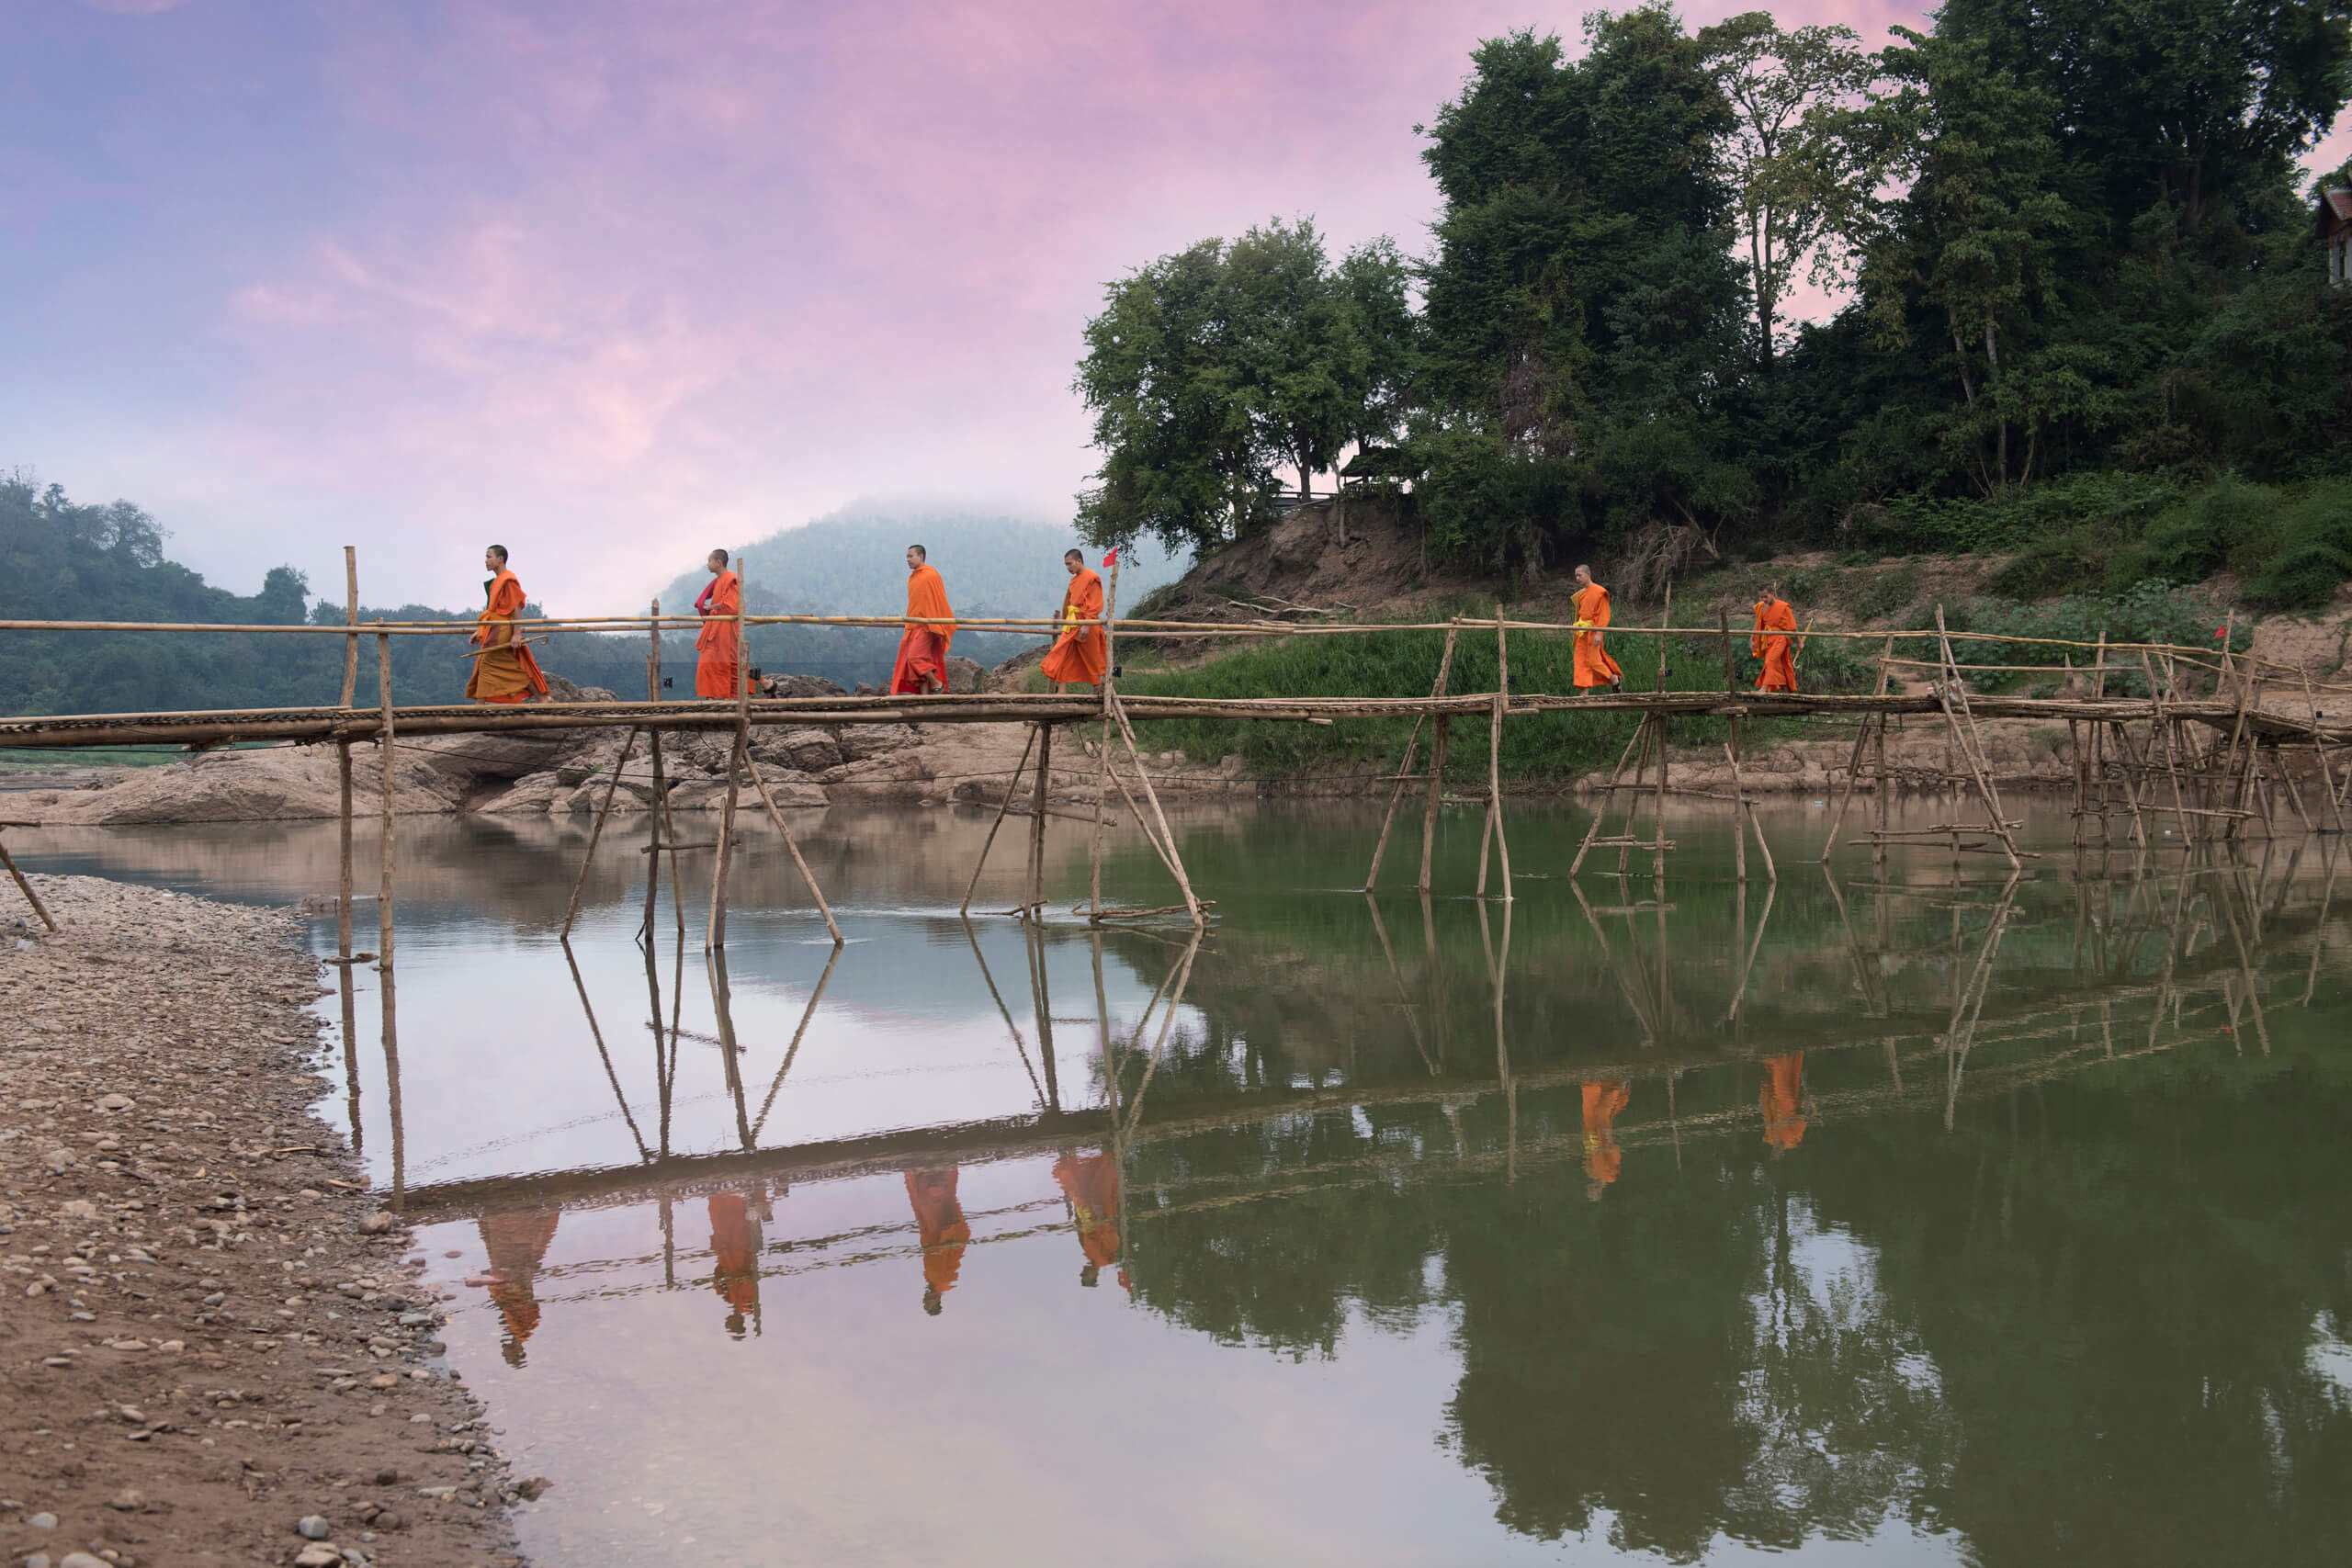 Monks crossing river on bamboo bridge